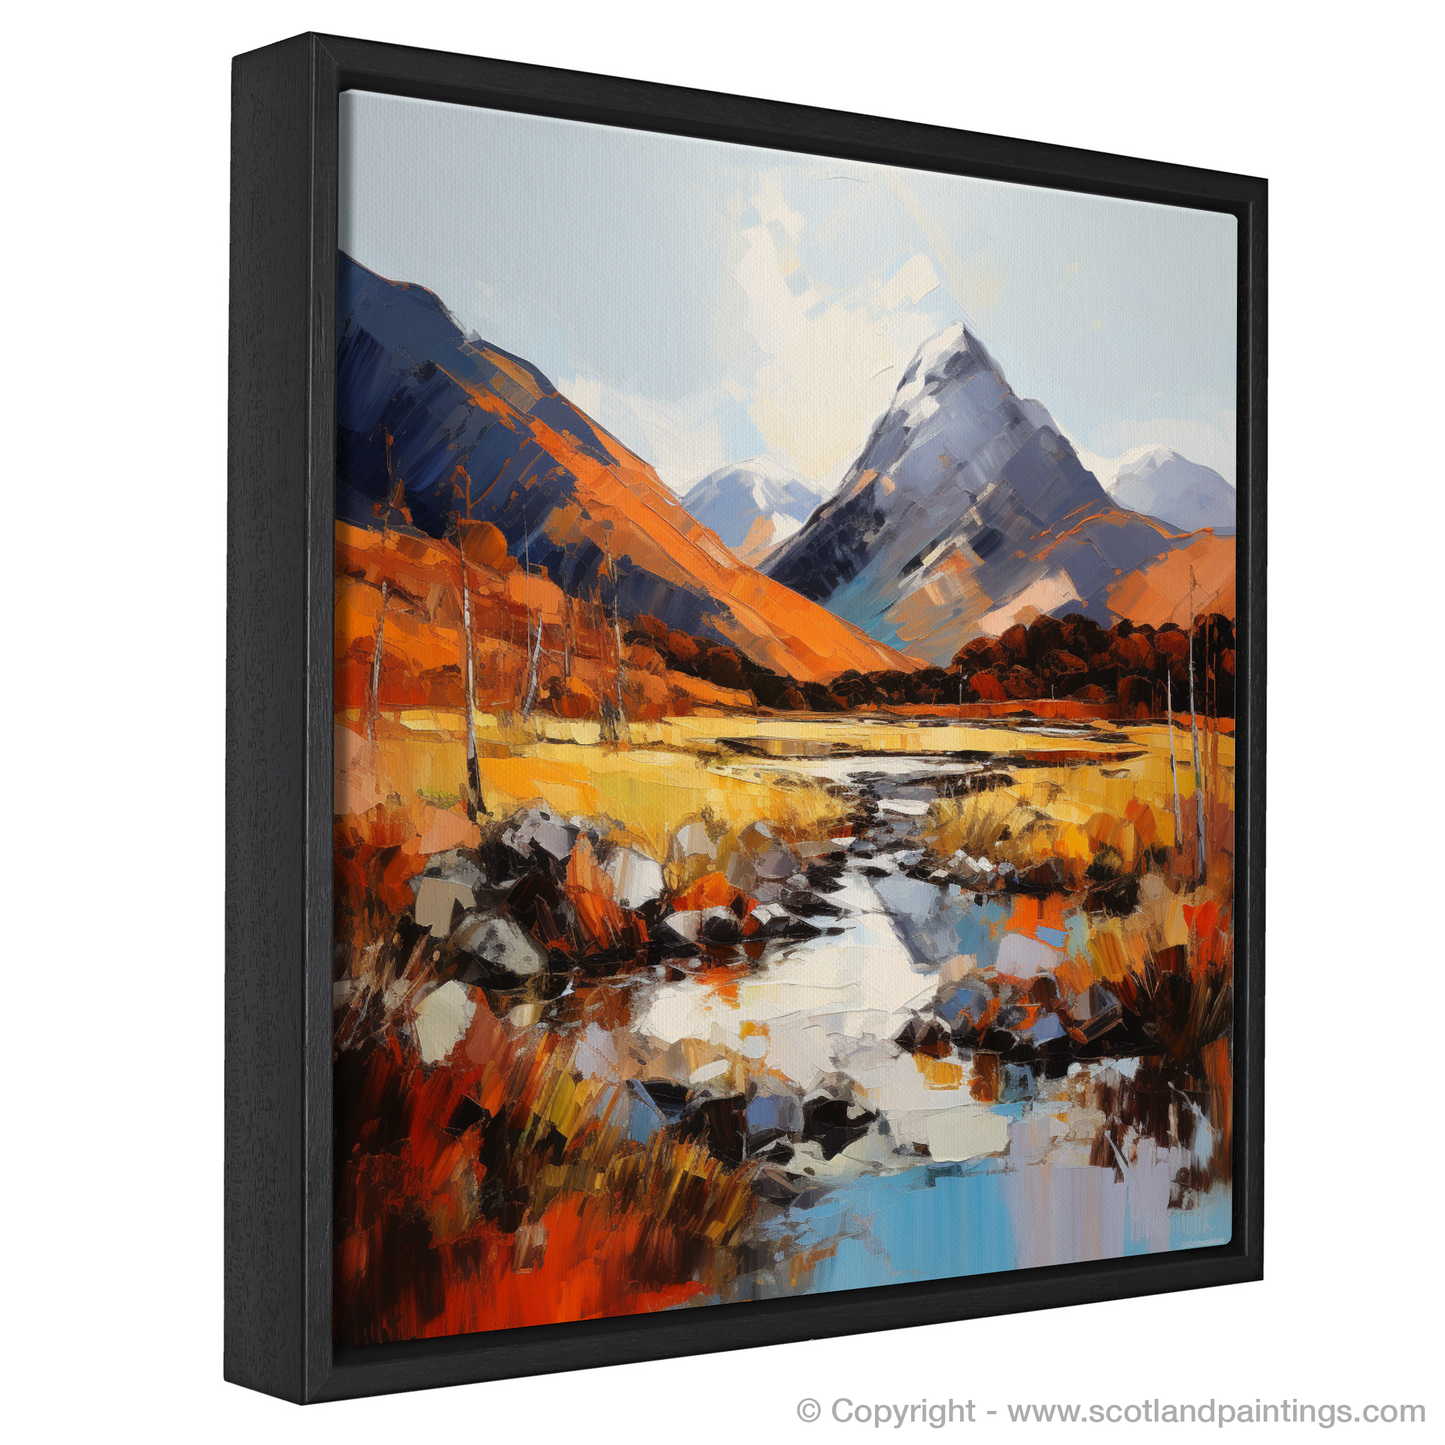 Painting and Art Print of Autumn hues in Glencoe entitled "Autumn Splendour in Glencoe".